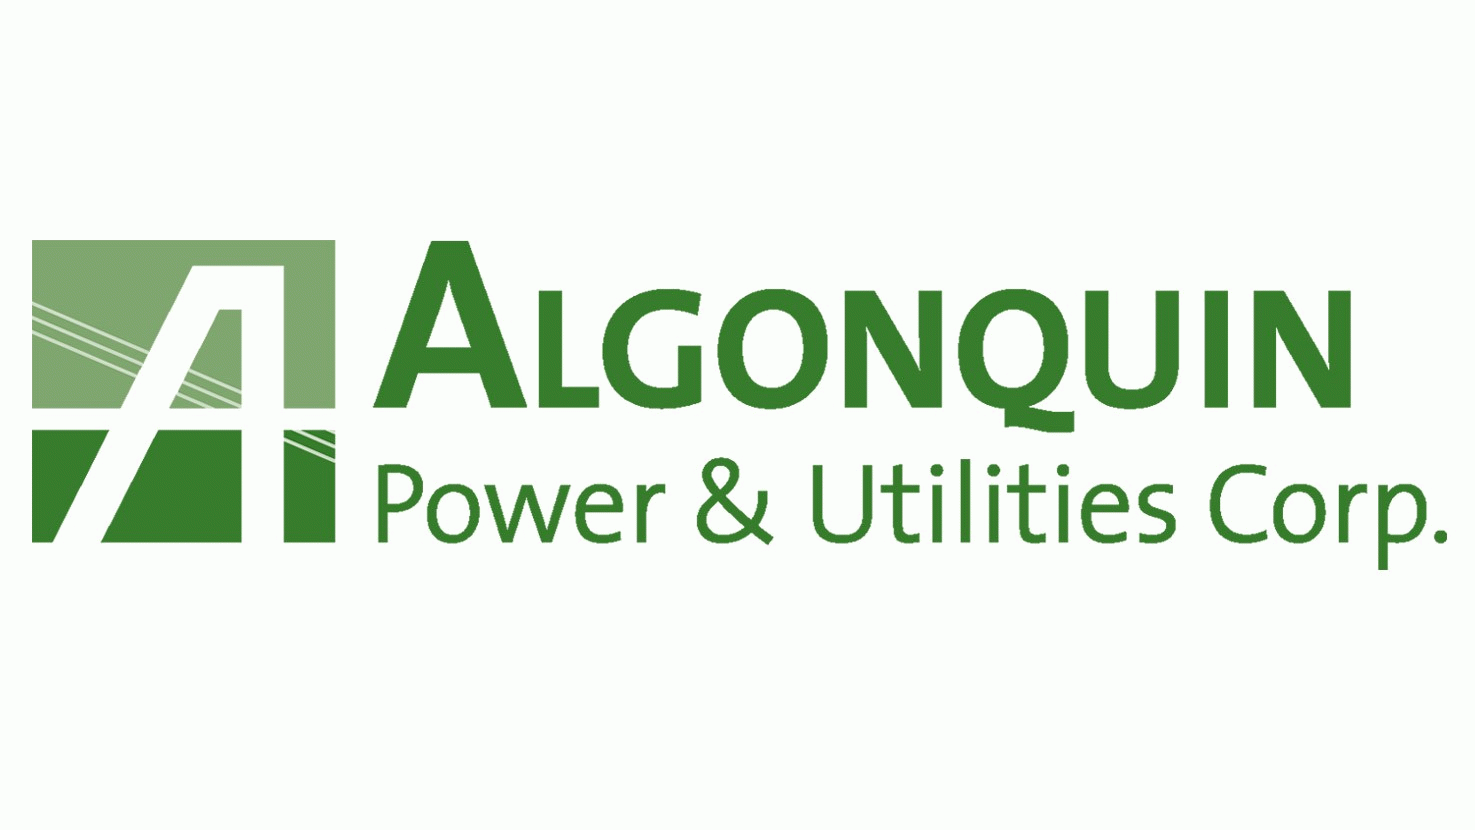 Algonquin Power & Utilities Corp. A